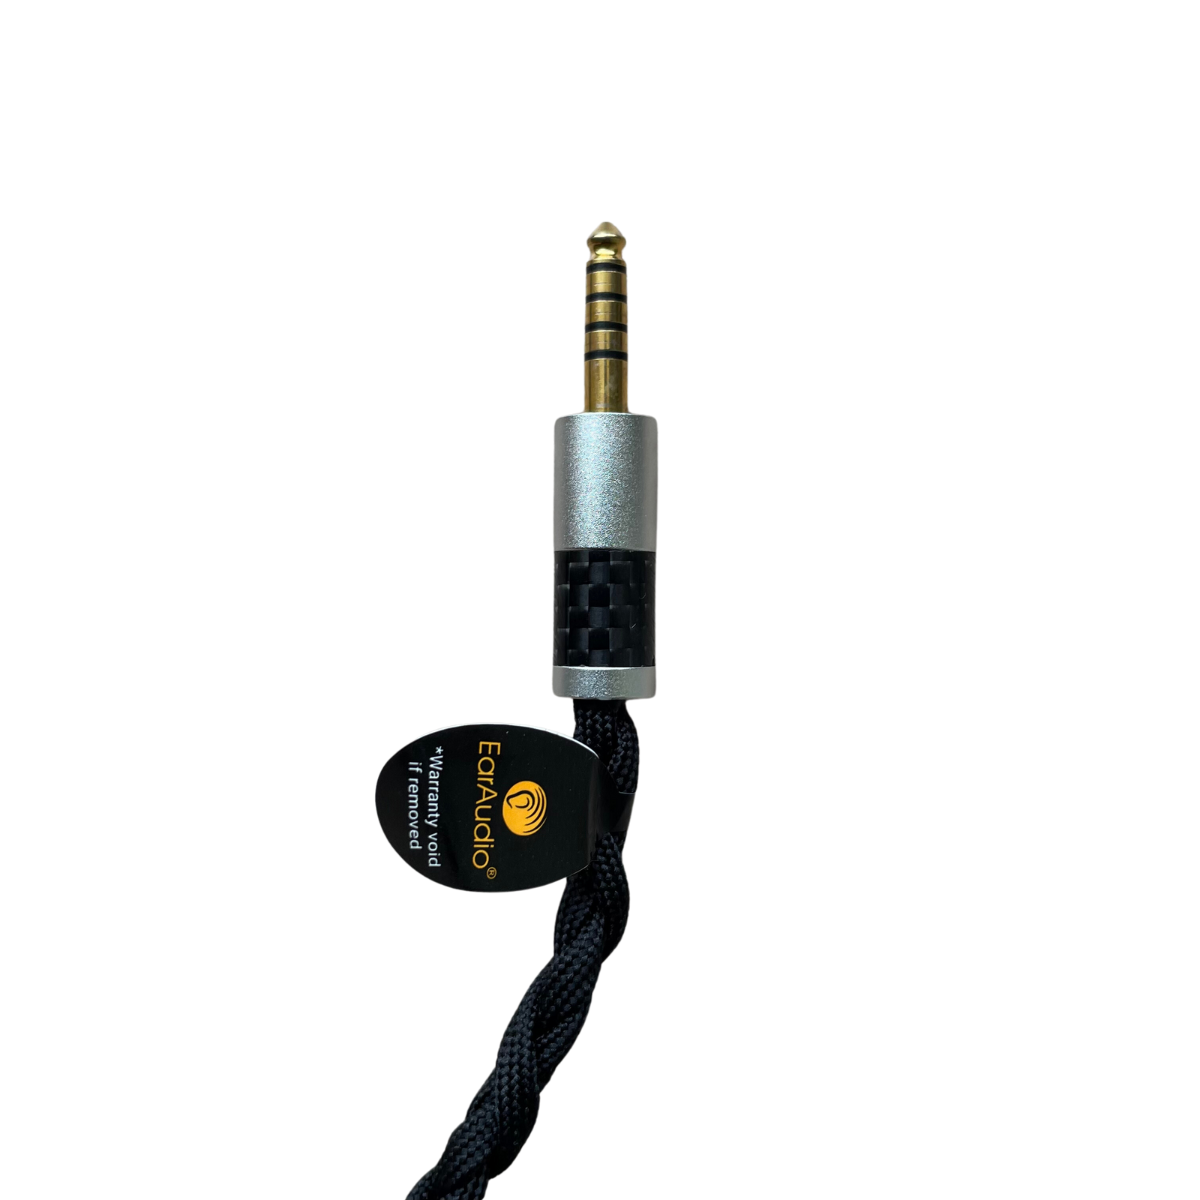 EarAudio Premium Headphone Replacement Cable